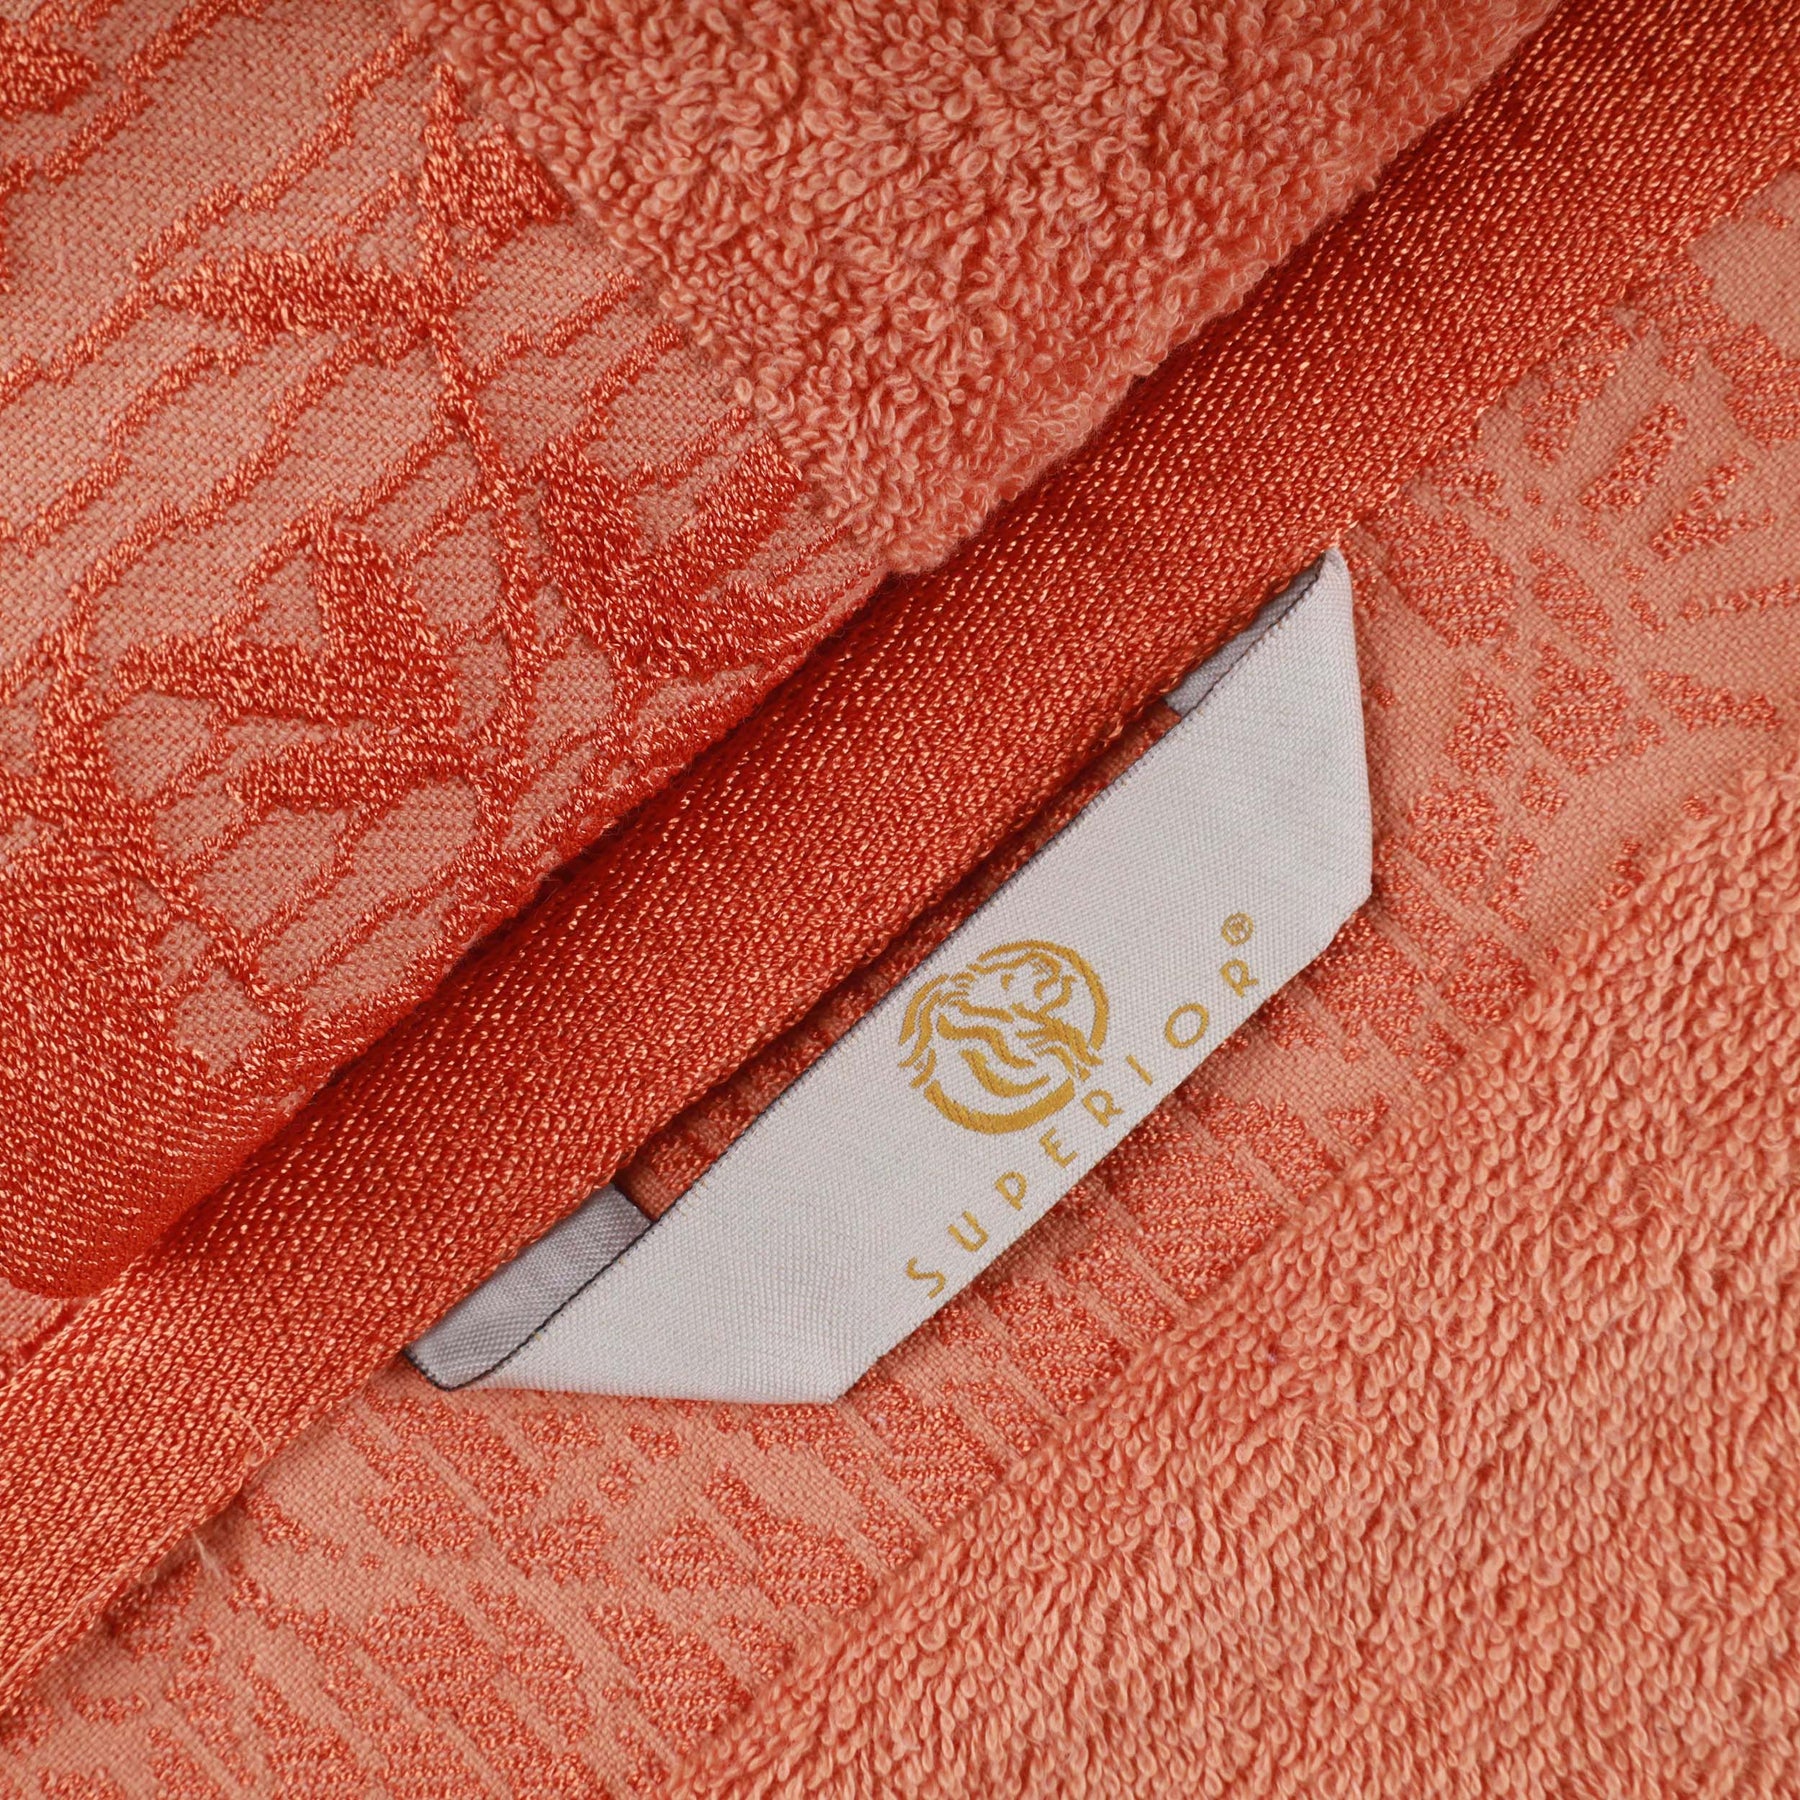 Wisteria Cotton Floral Embroidered Jacquard Border Bath Towel - Mandarin